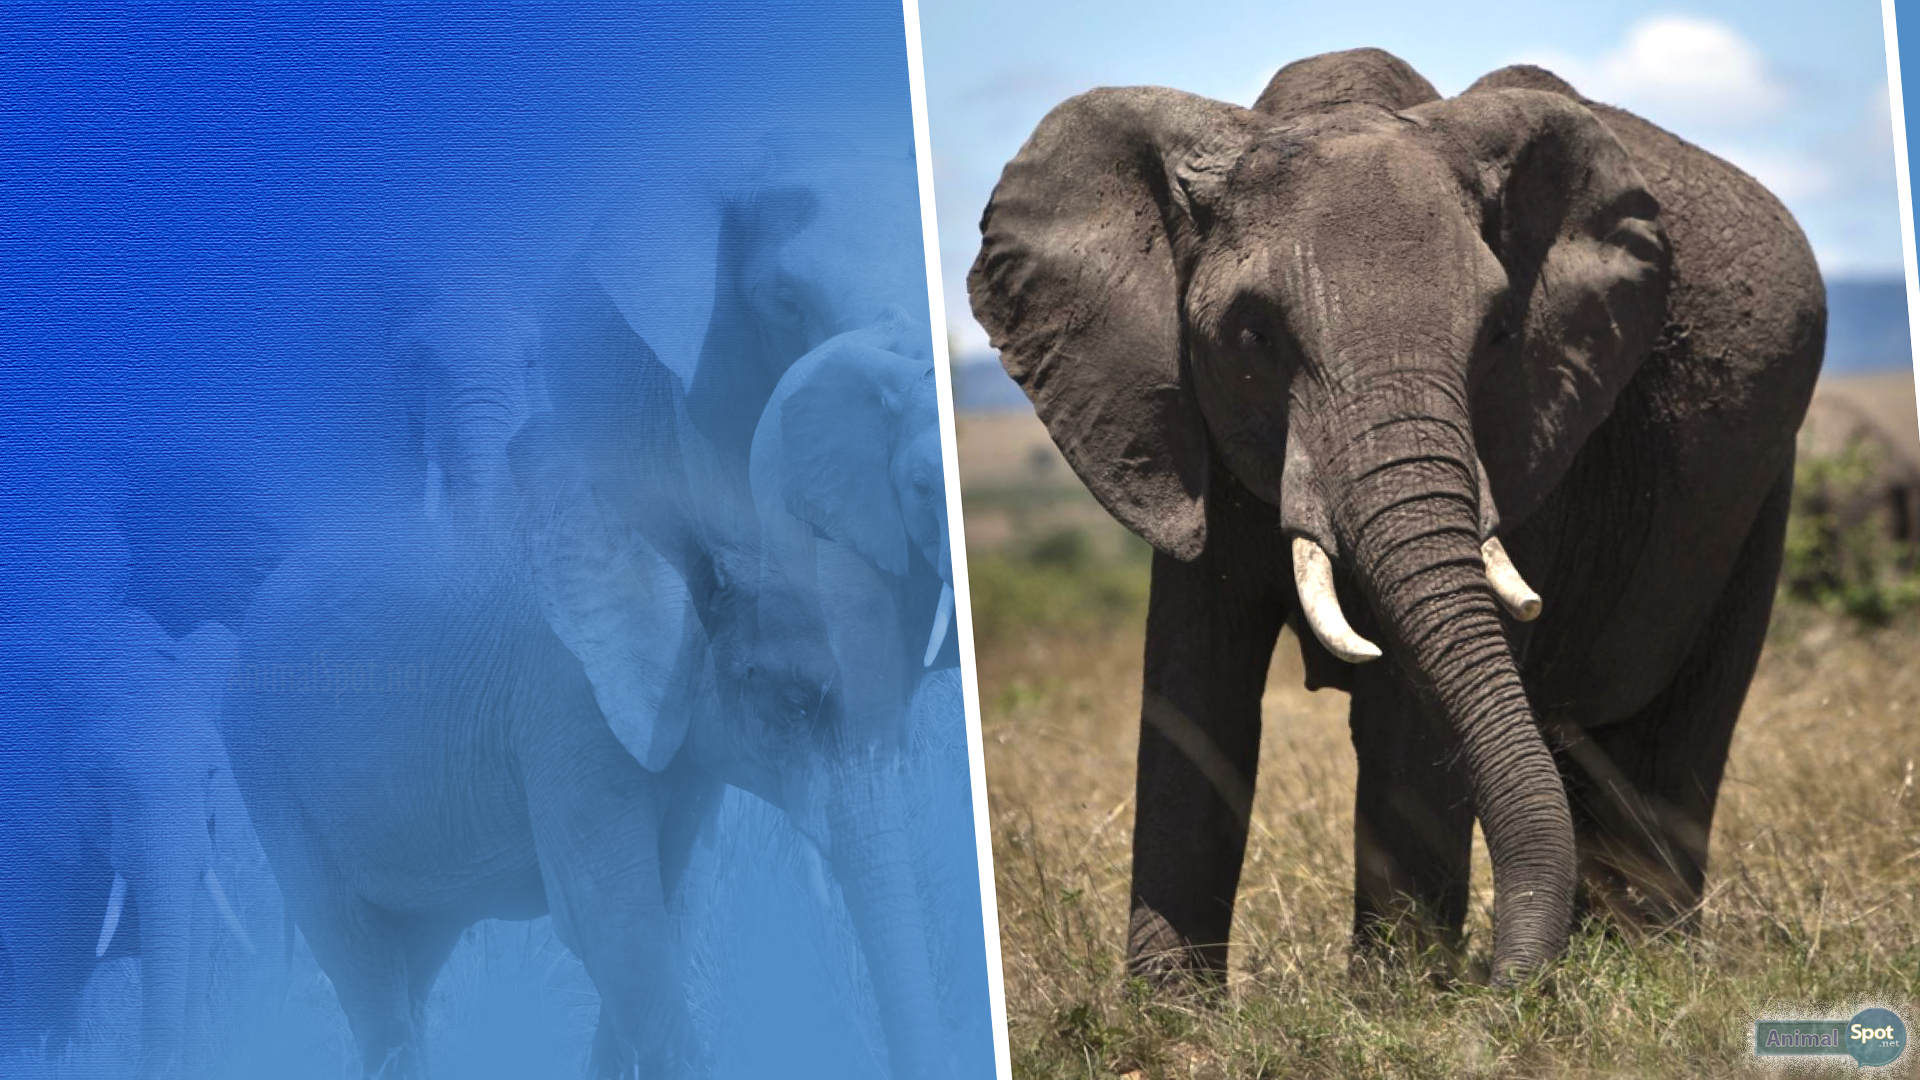 elephant wallpaper,elephant,elephants and mammoths,terrestrial animal,wildlife,indian elephant